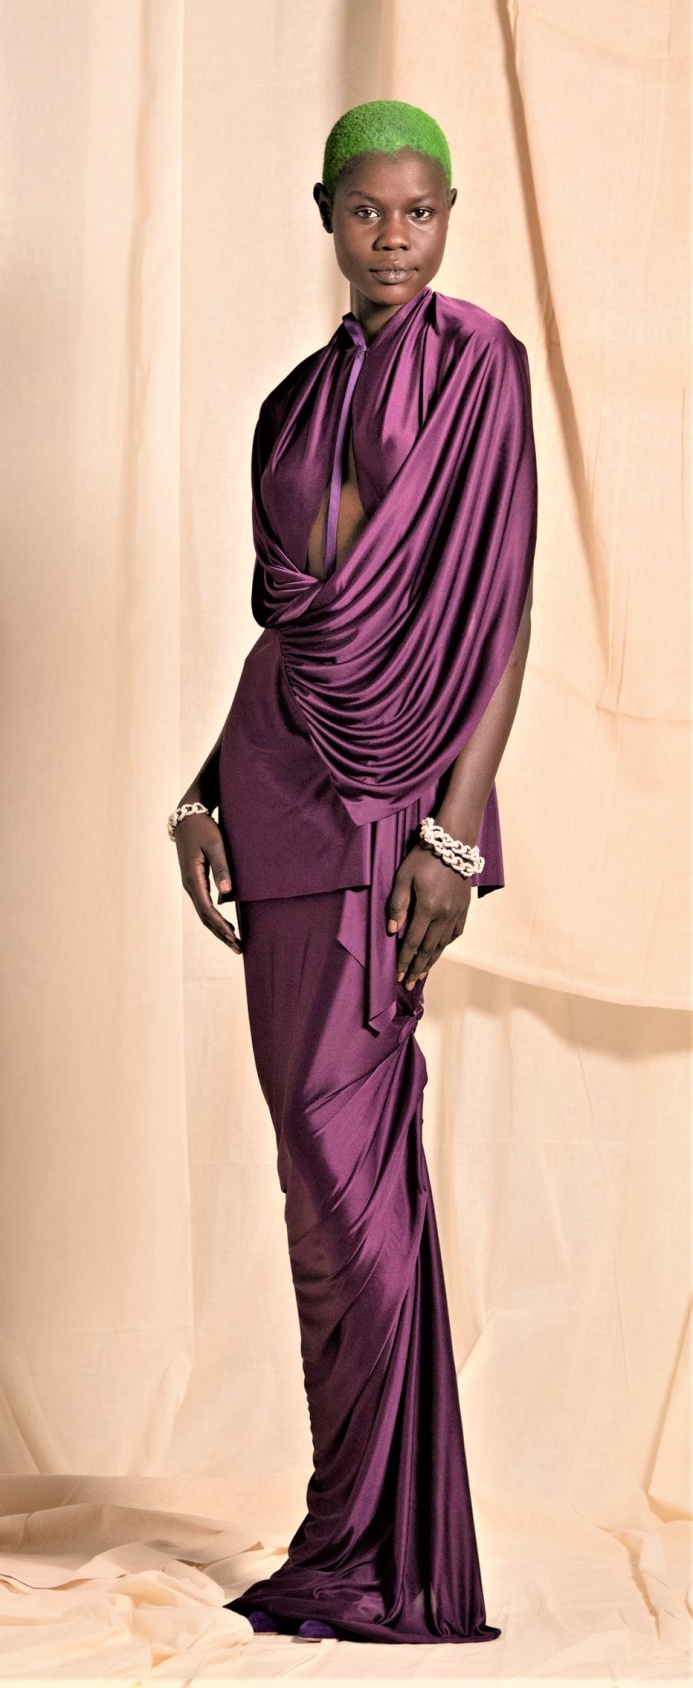 London 2-22 richard m purple draped gown vogue cropped.jpg